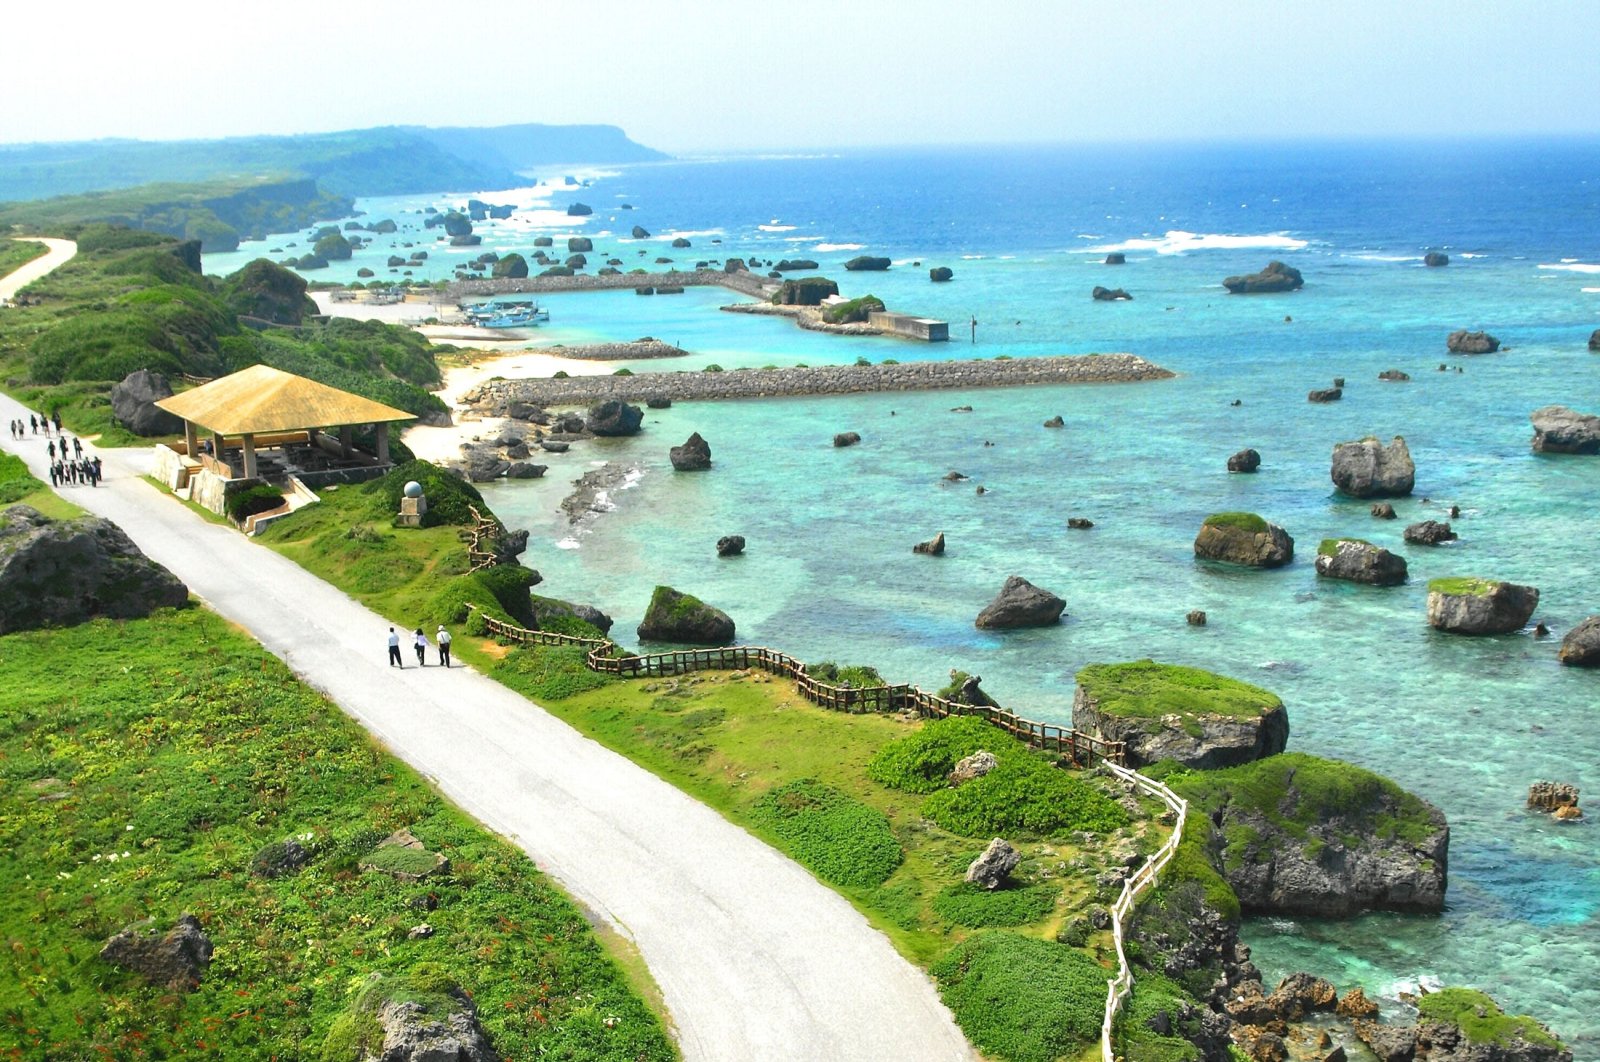 The Okinawa island, in Japan. (Shutterstock Photo)